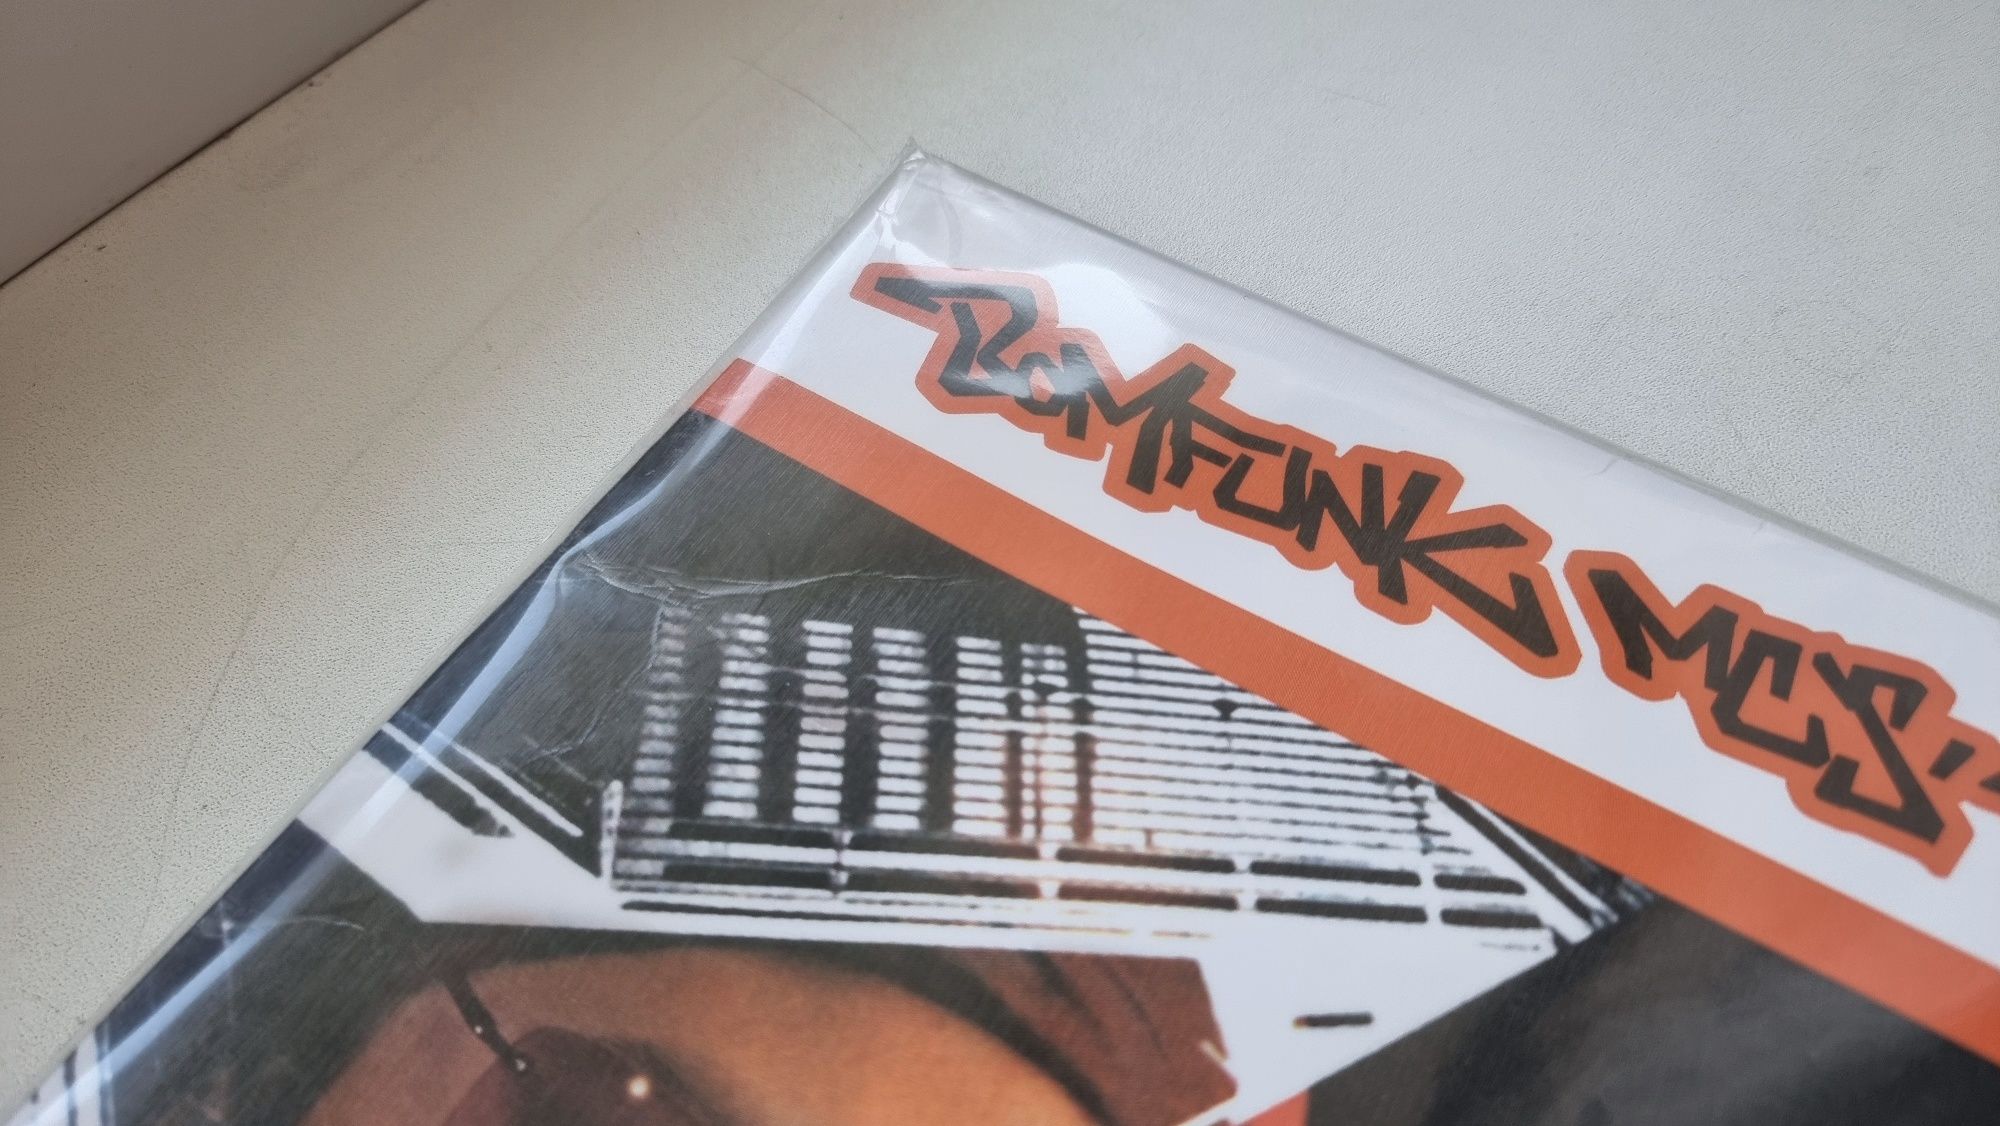 Bomfunk MC's – Burnin' Sneakers vinyl LP
LP, Limited Edition